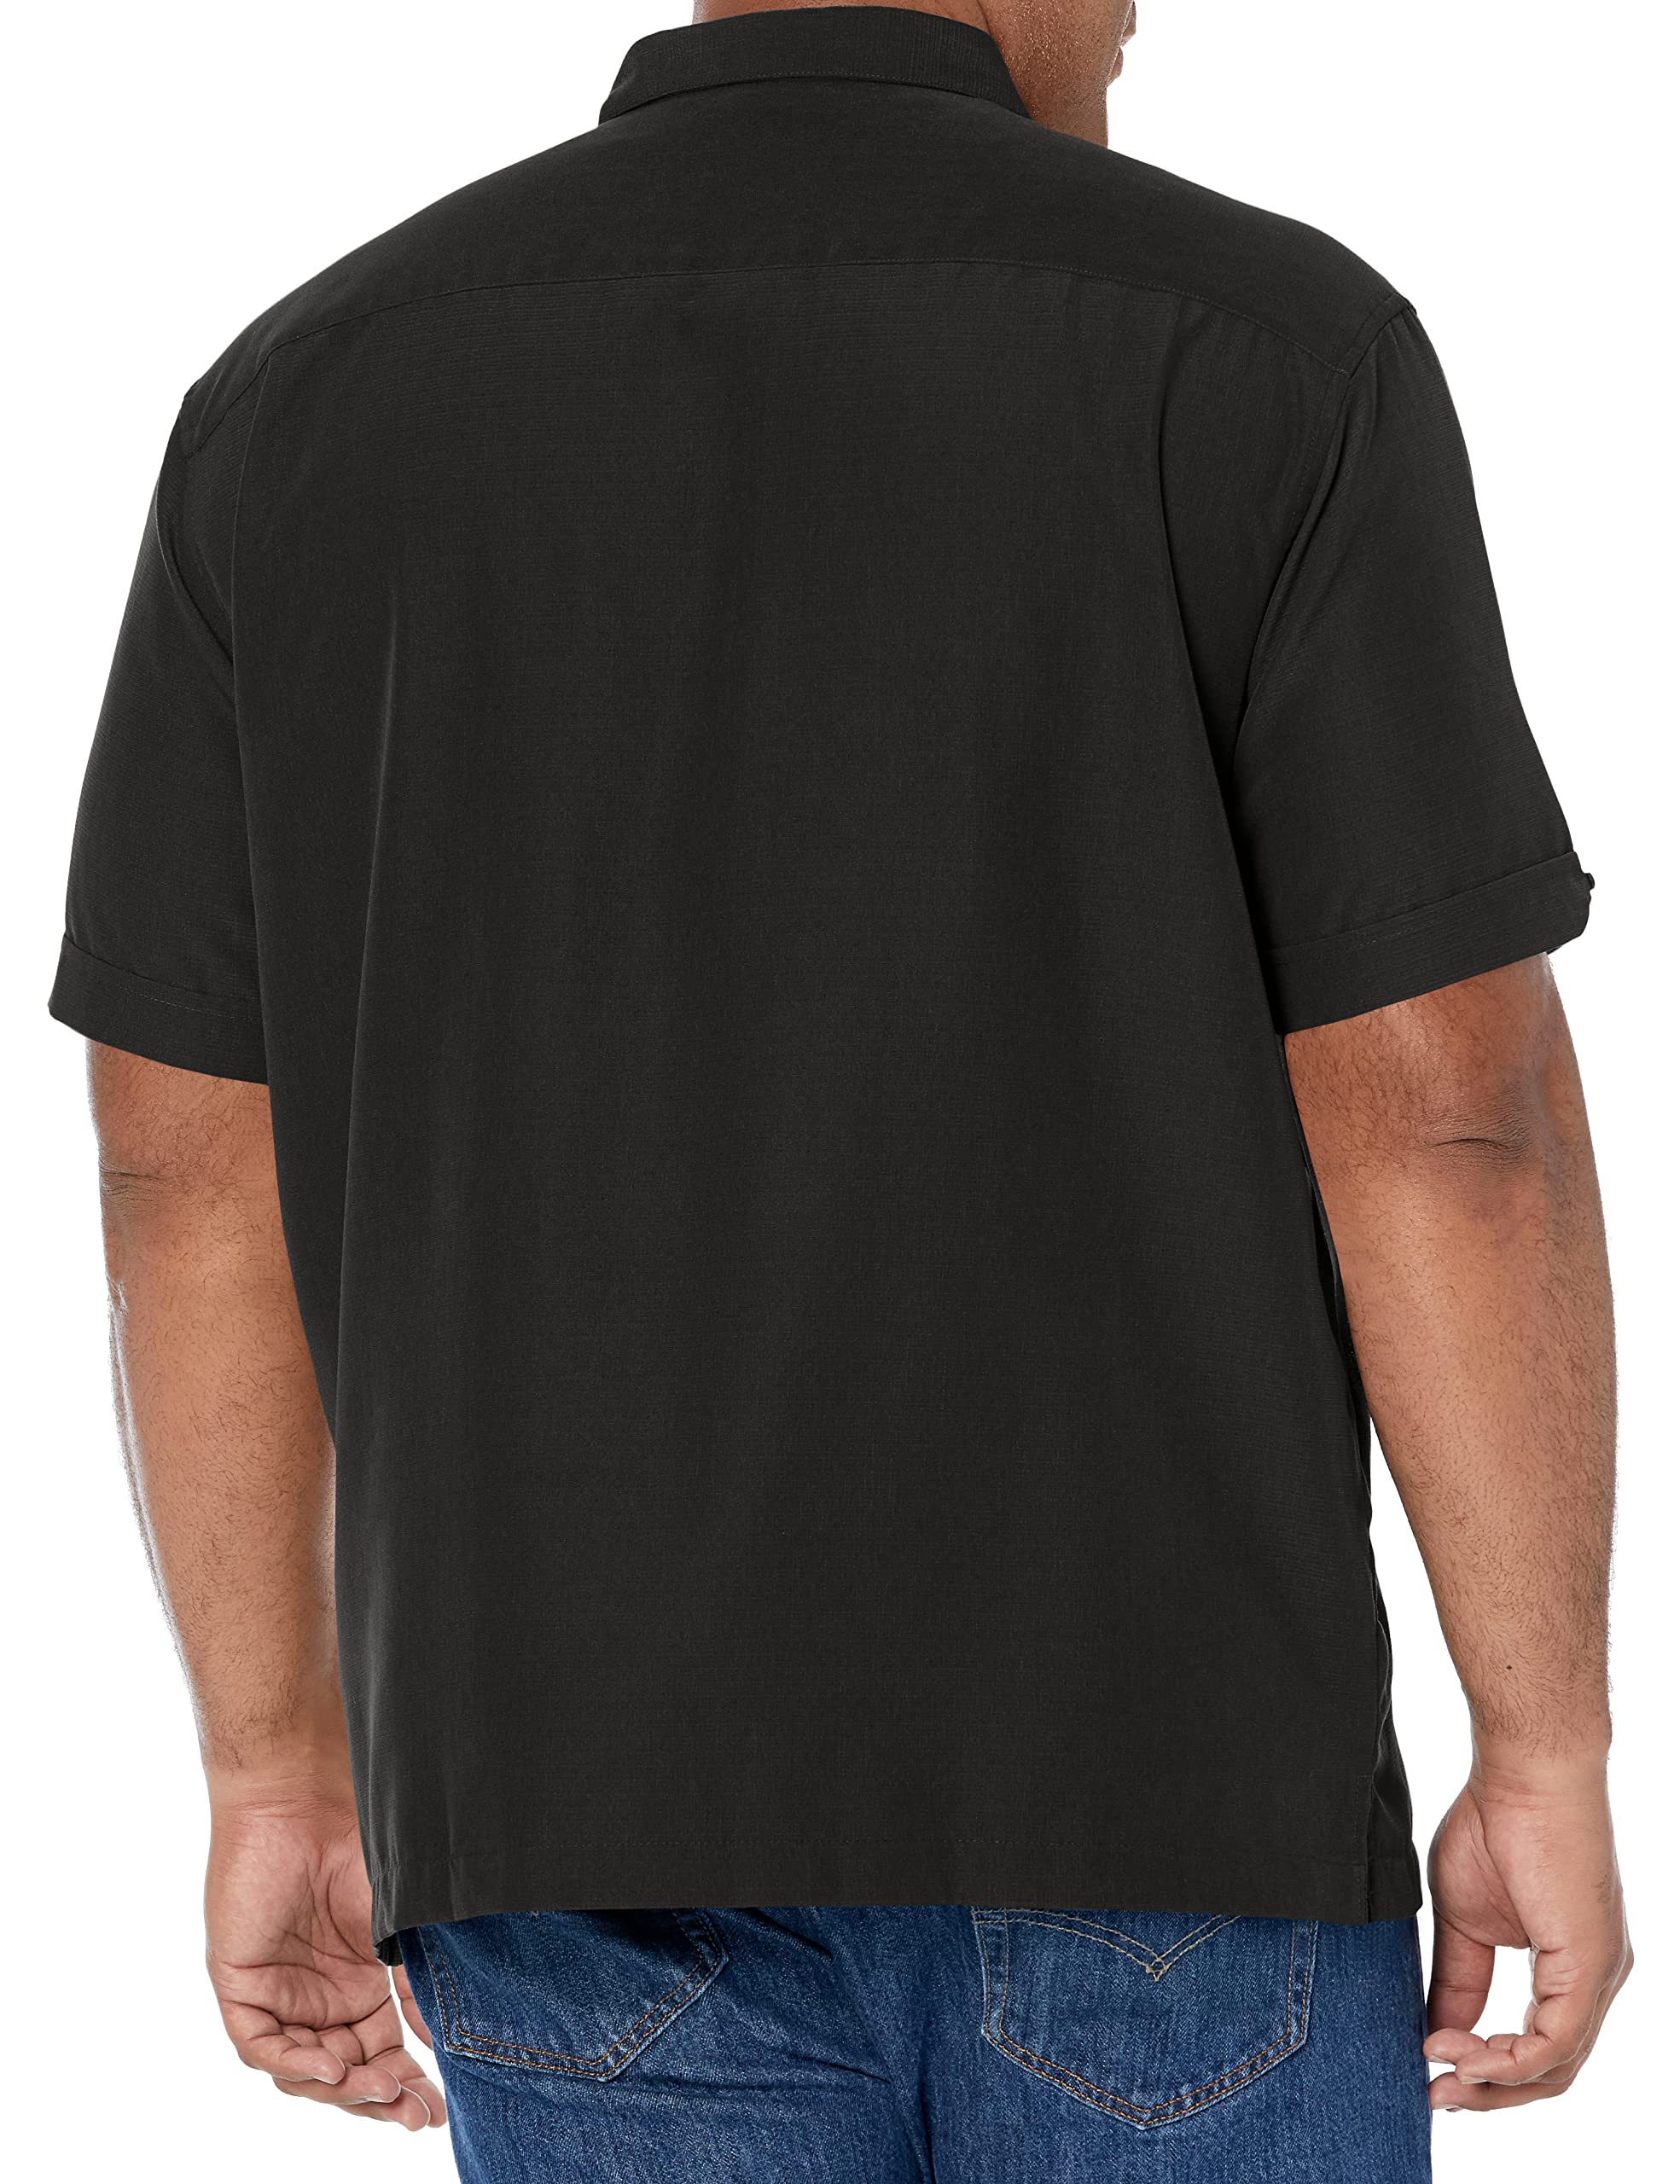 Cubavera Men's Striped Panel Dobby Short Sleeve Button-Down Shirt (Size Small - 5X Big & Tall)